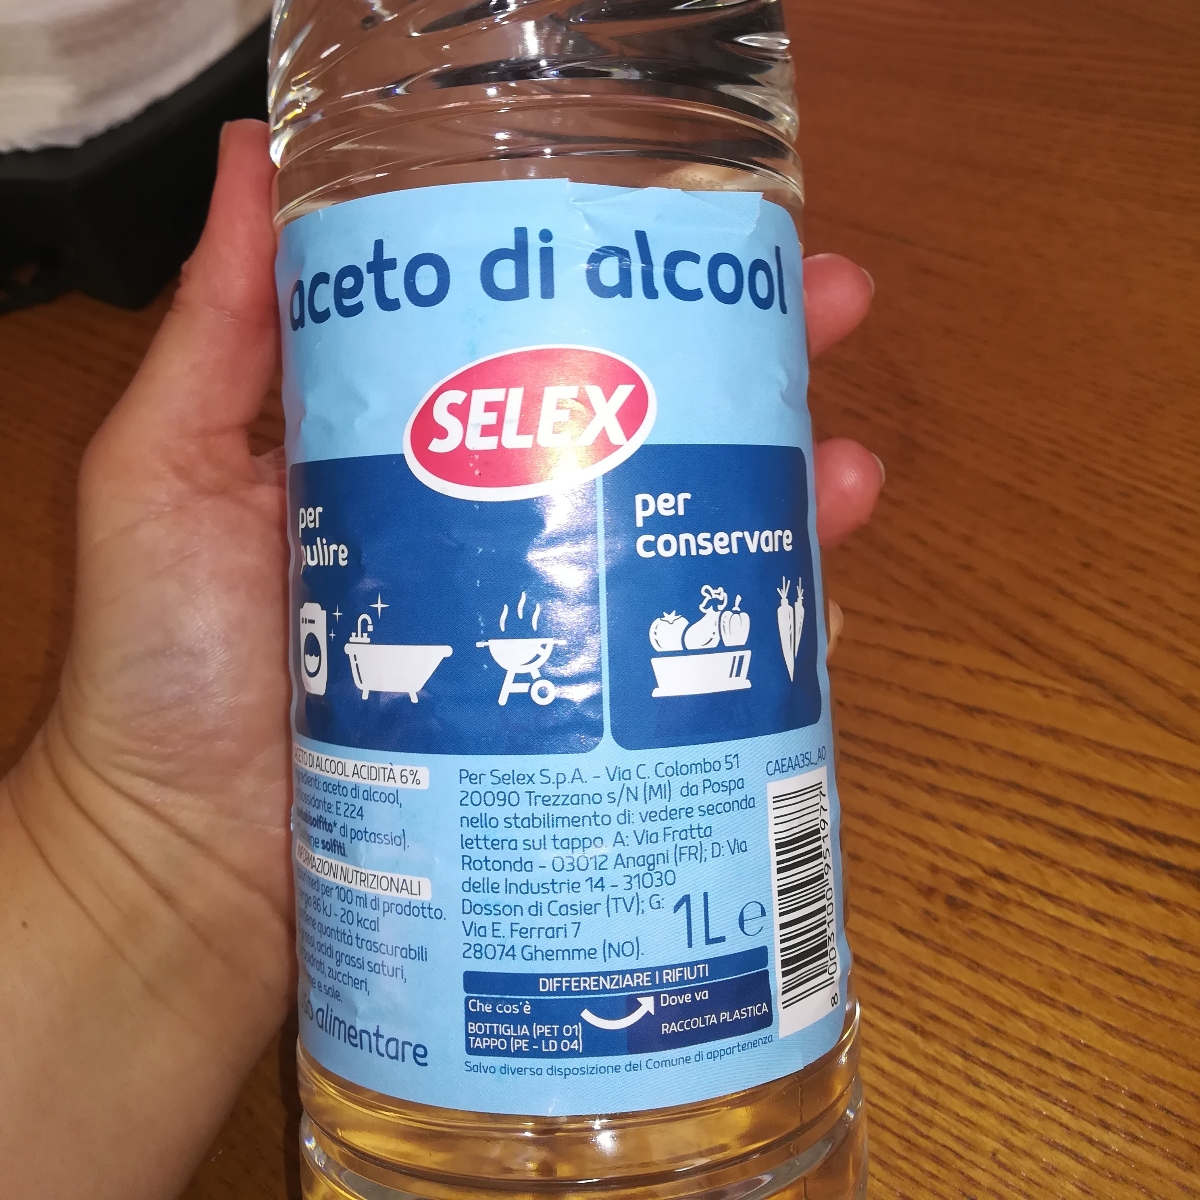 Selex aceto di alcool Reviews